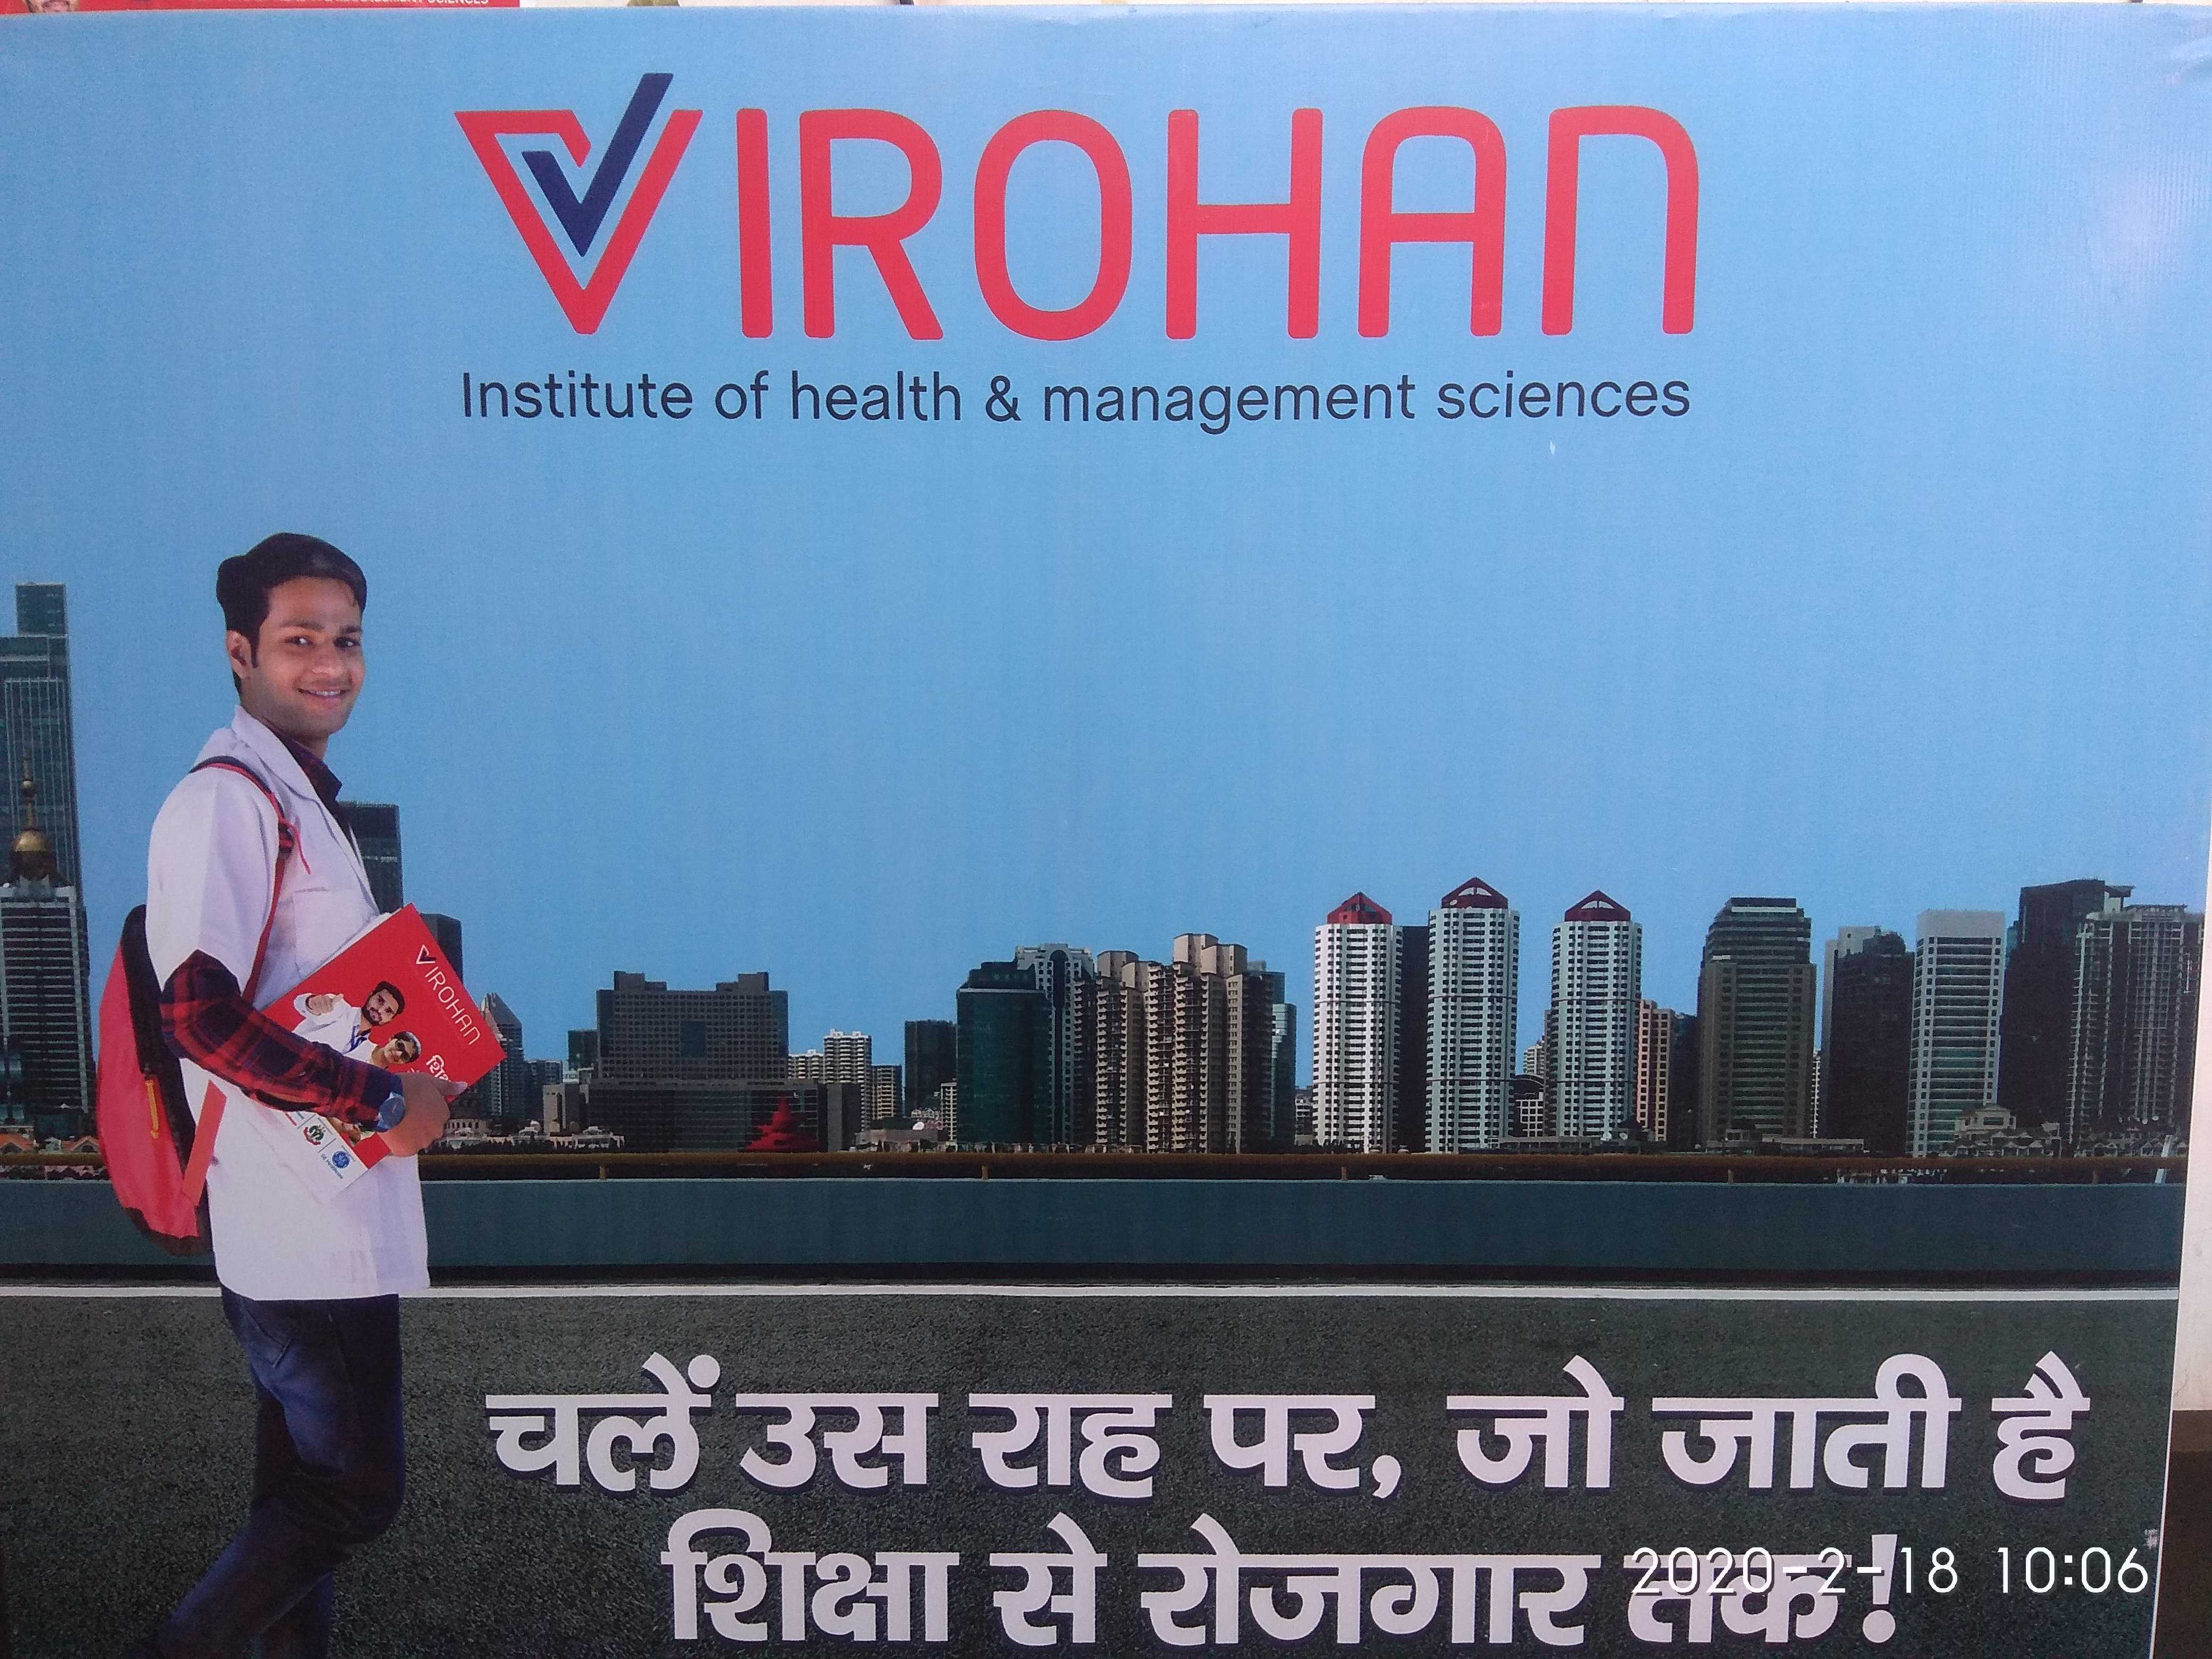 Virohan Institute of Healthcare & management in Nehru Ground, Faridabad-121001 | Sulekha Faridabad